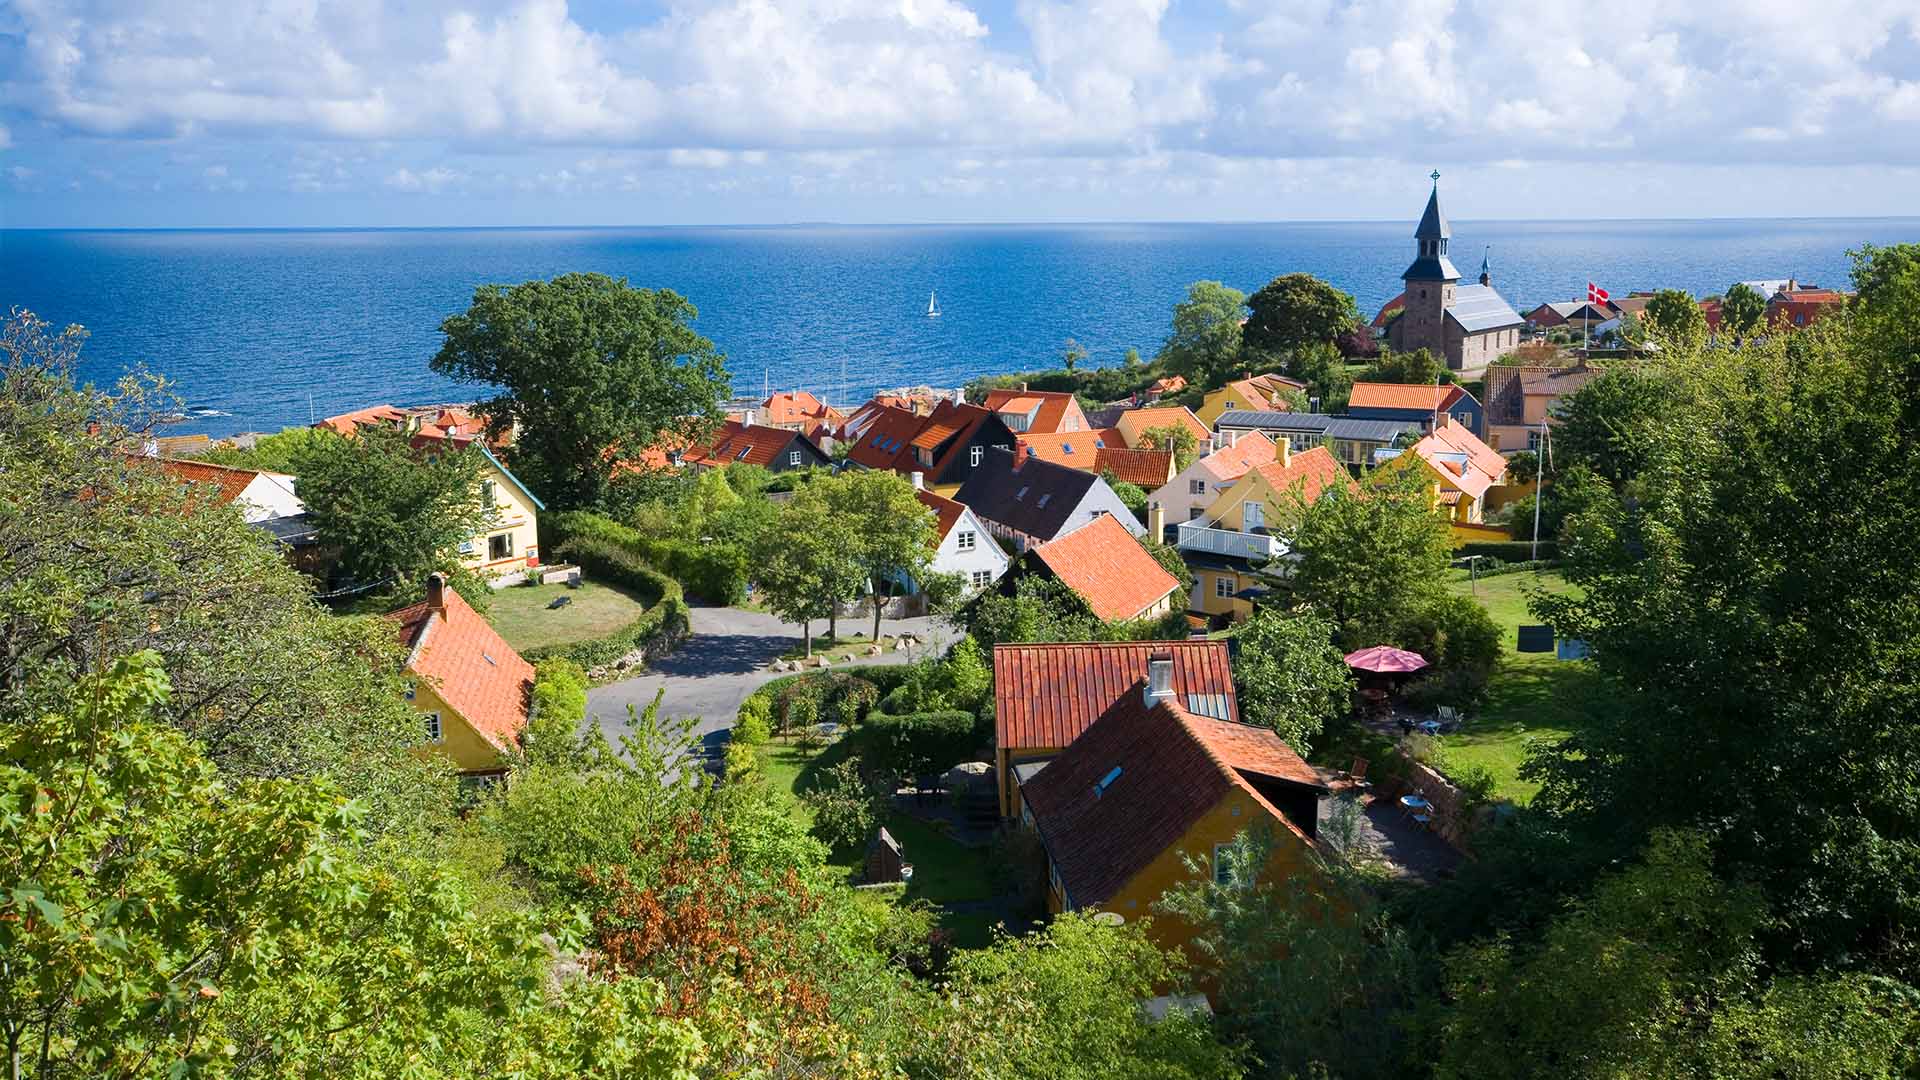 Bornholm island, Baltic Sea, Denmark